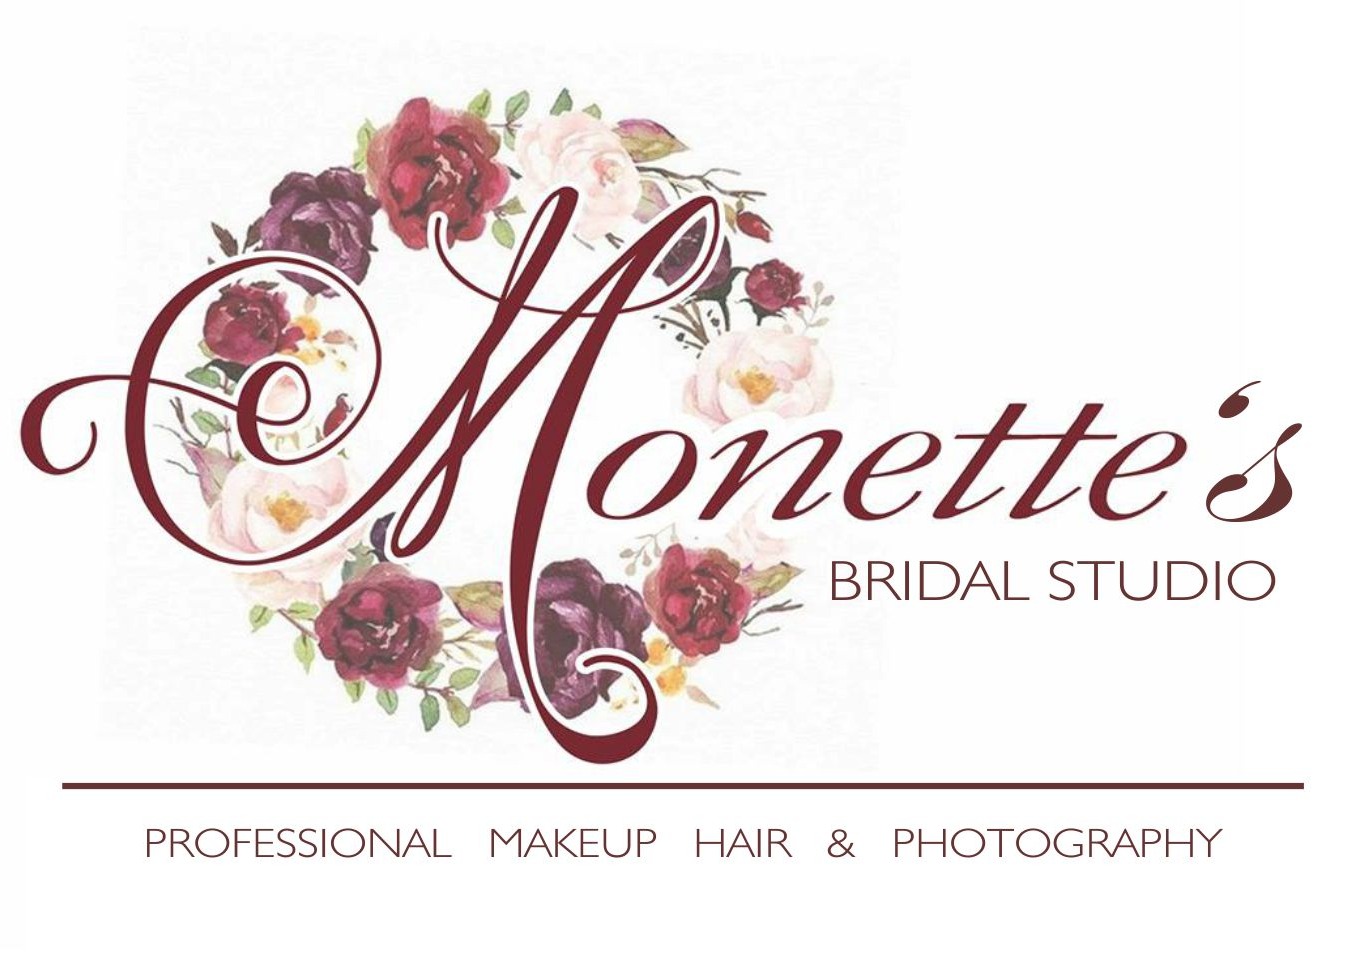 Monette's Bridal Studio & Beauty Salon